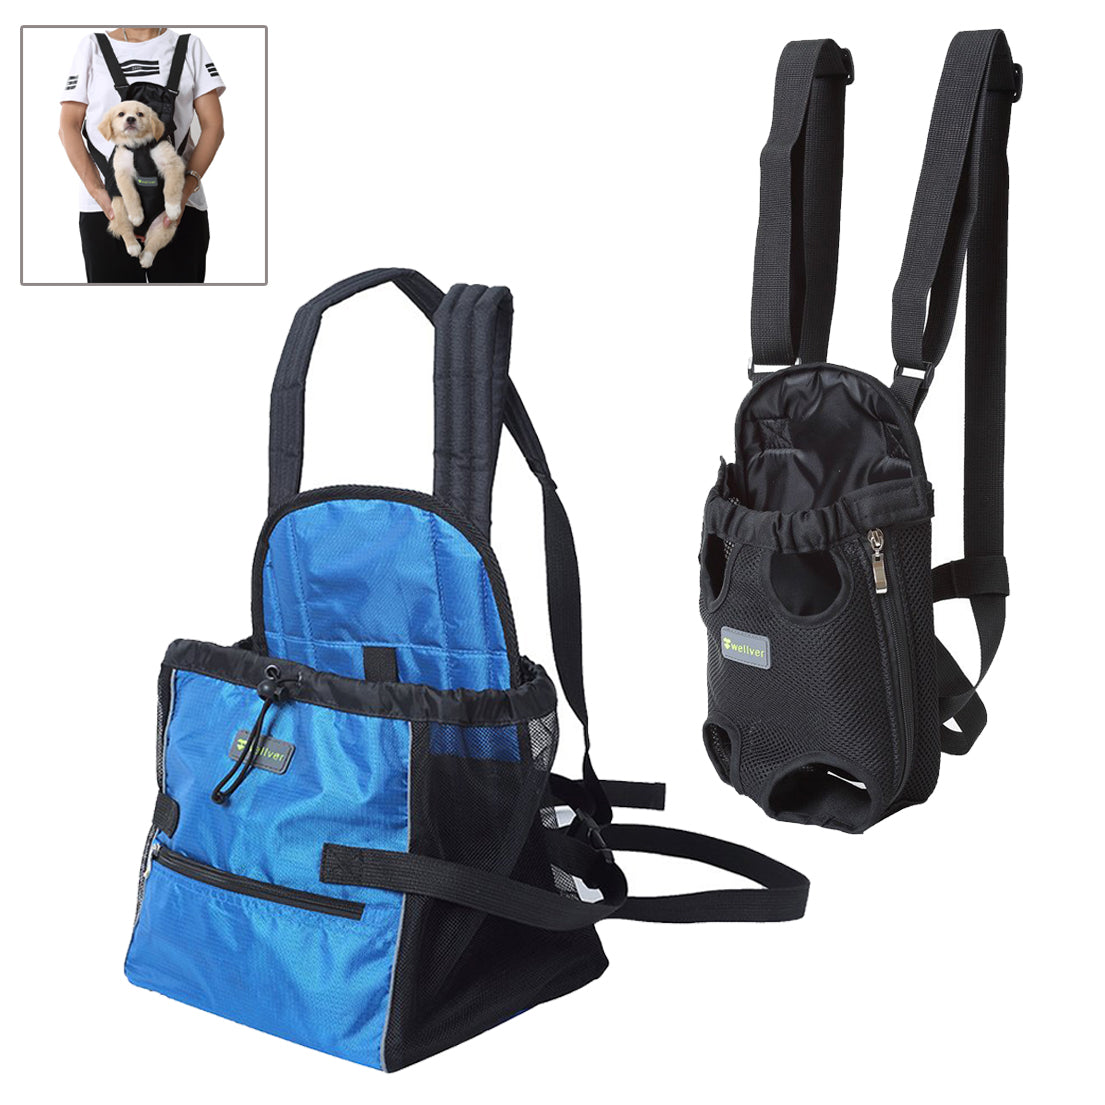 Wellver Dog Front Carrier (Small Black Bag & Medium Blue Bag)